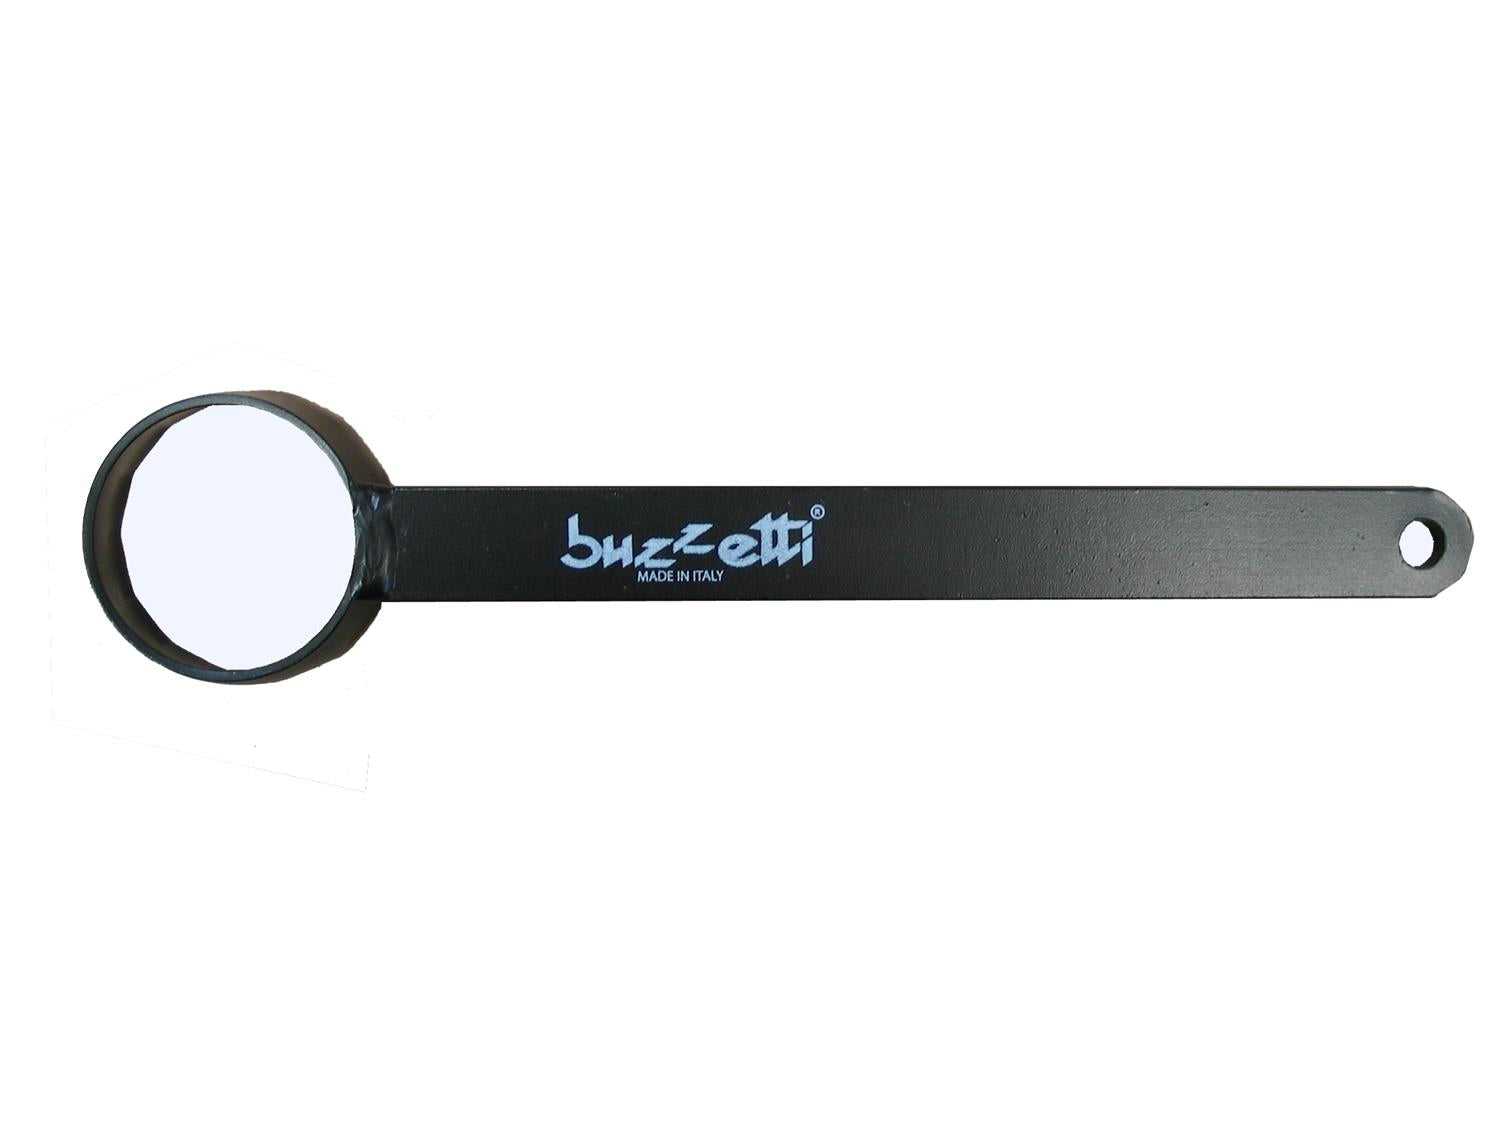 BUZZETTI, Buzzetti Spin-On Filter Tool